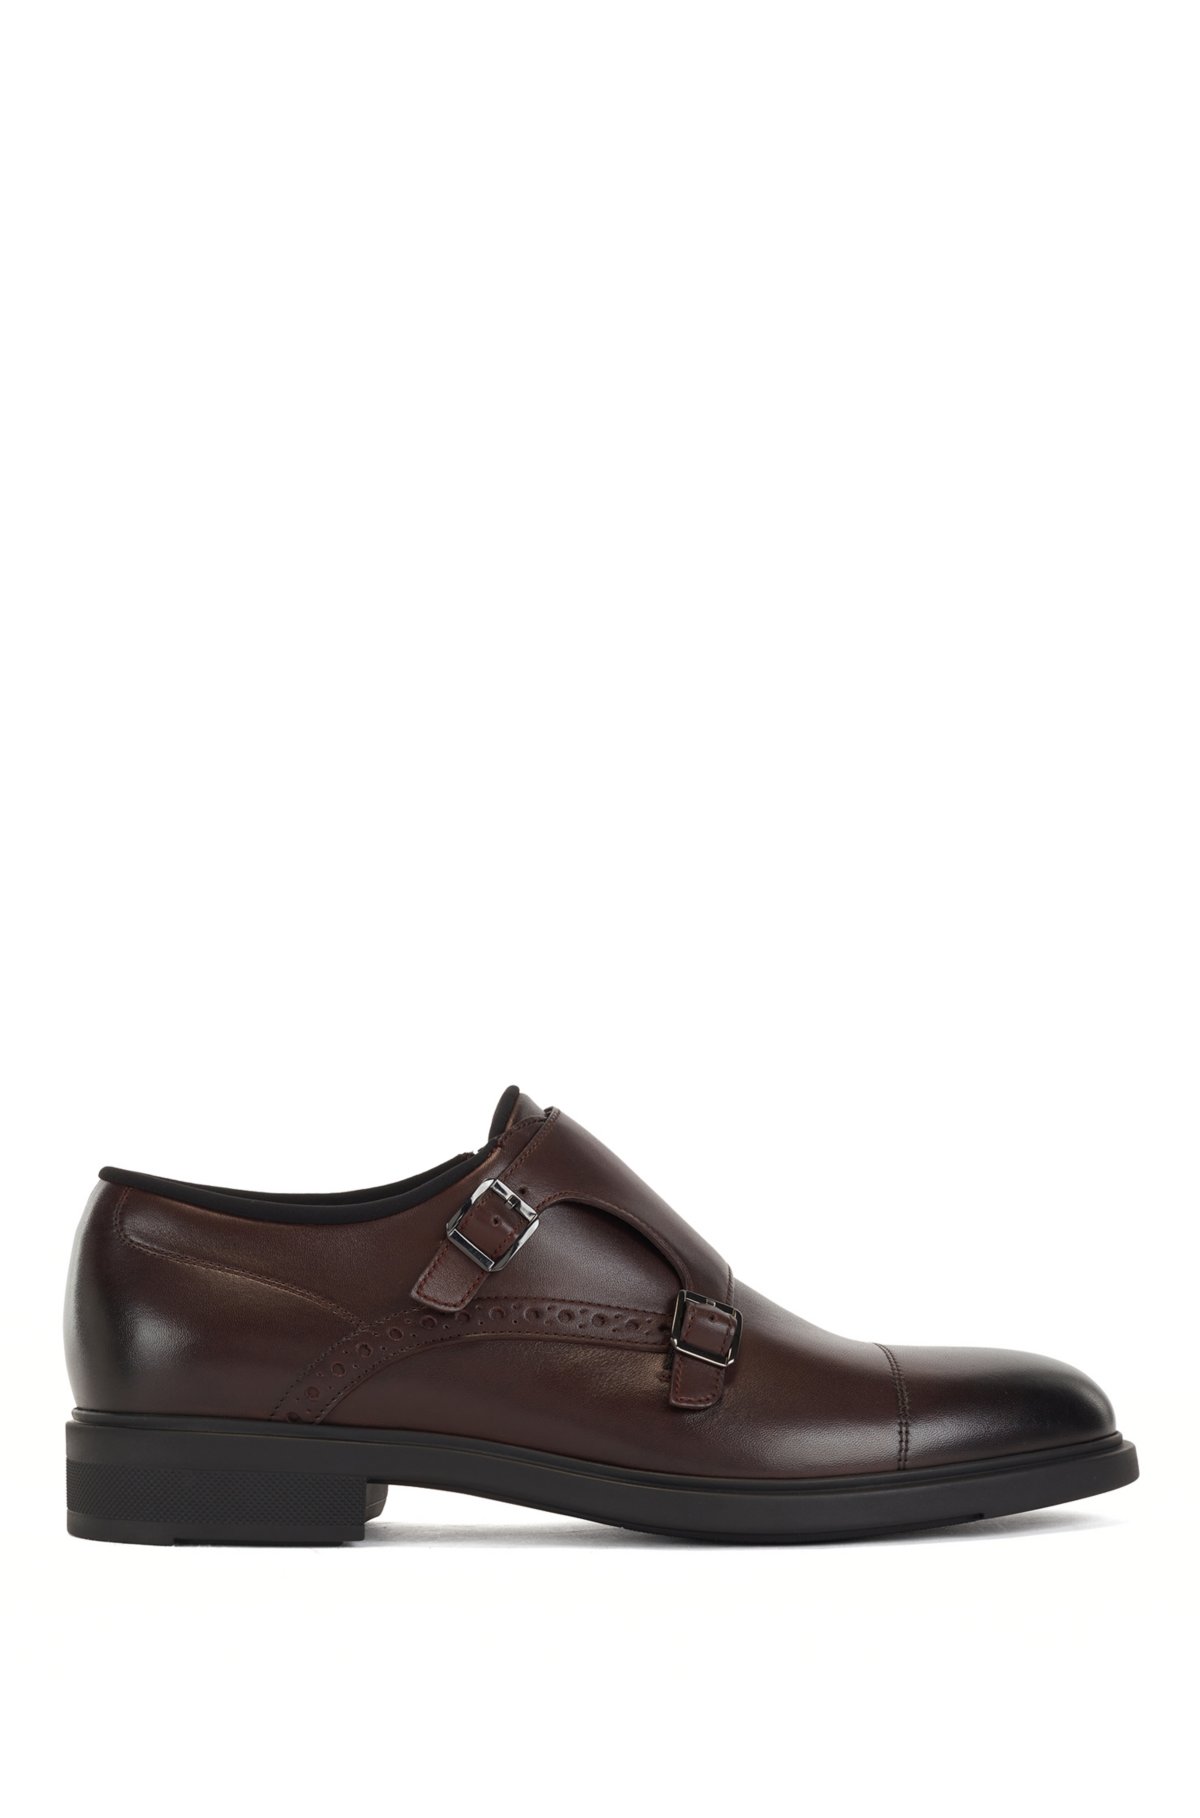 Presentator Disco minimum BOSS - Italian-leather monk shoes with Outlast® lining